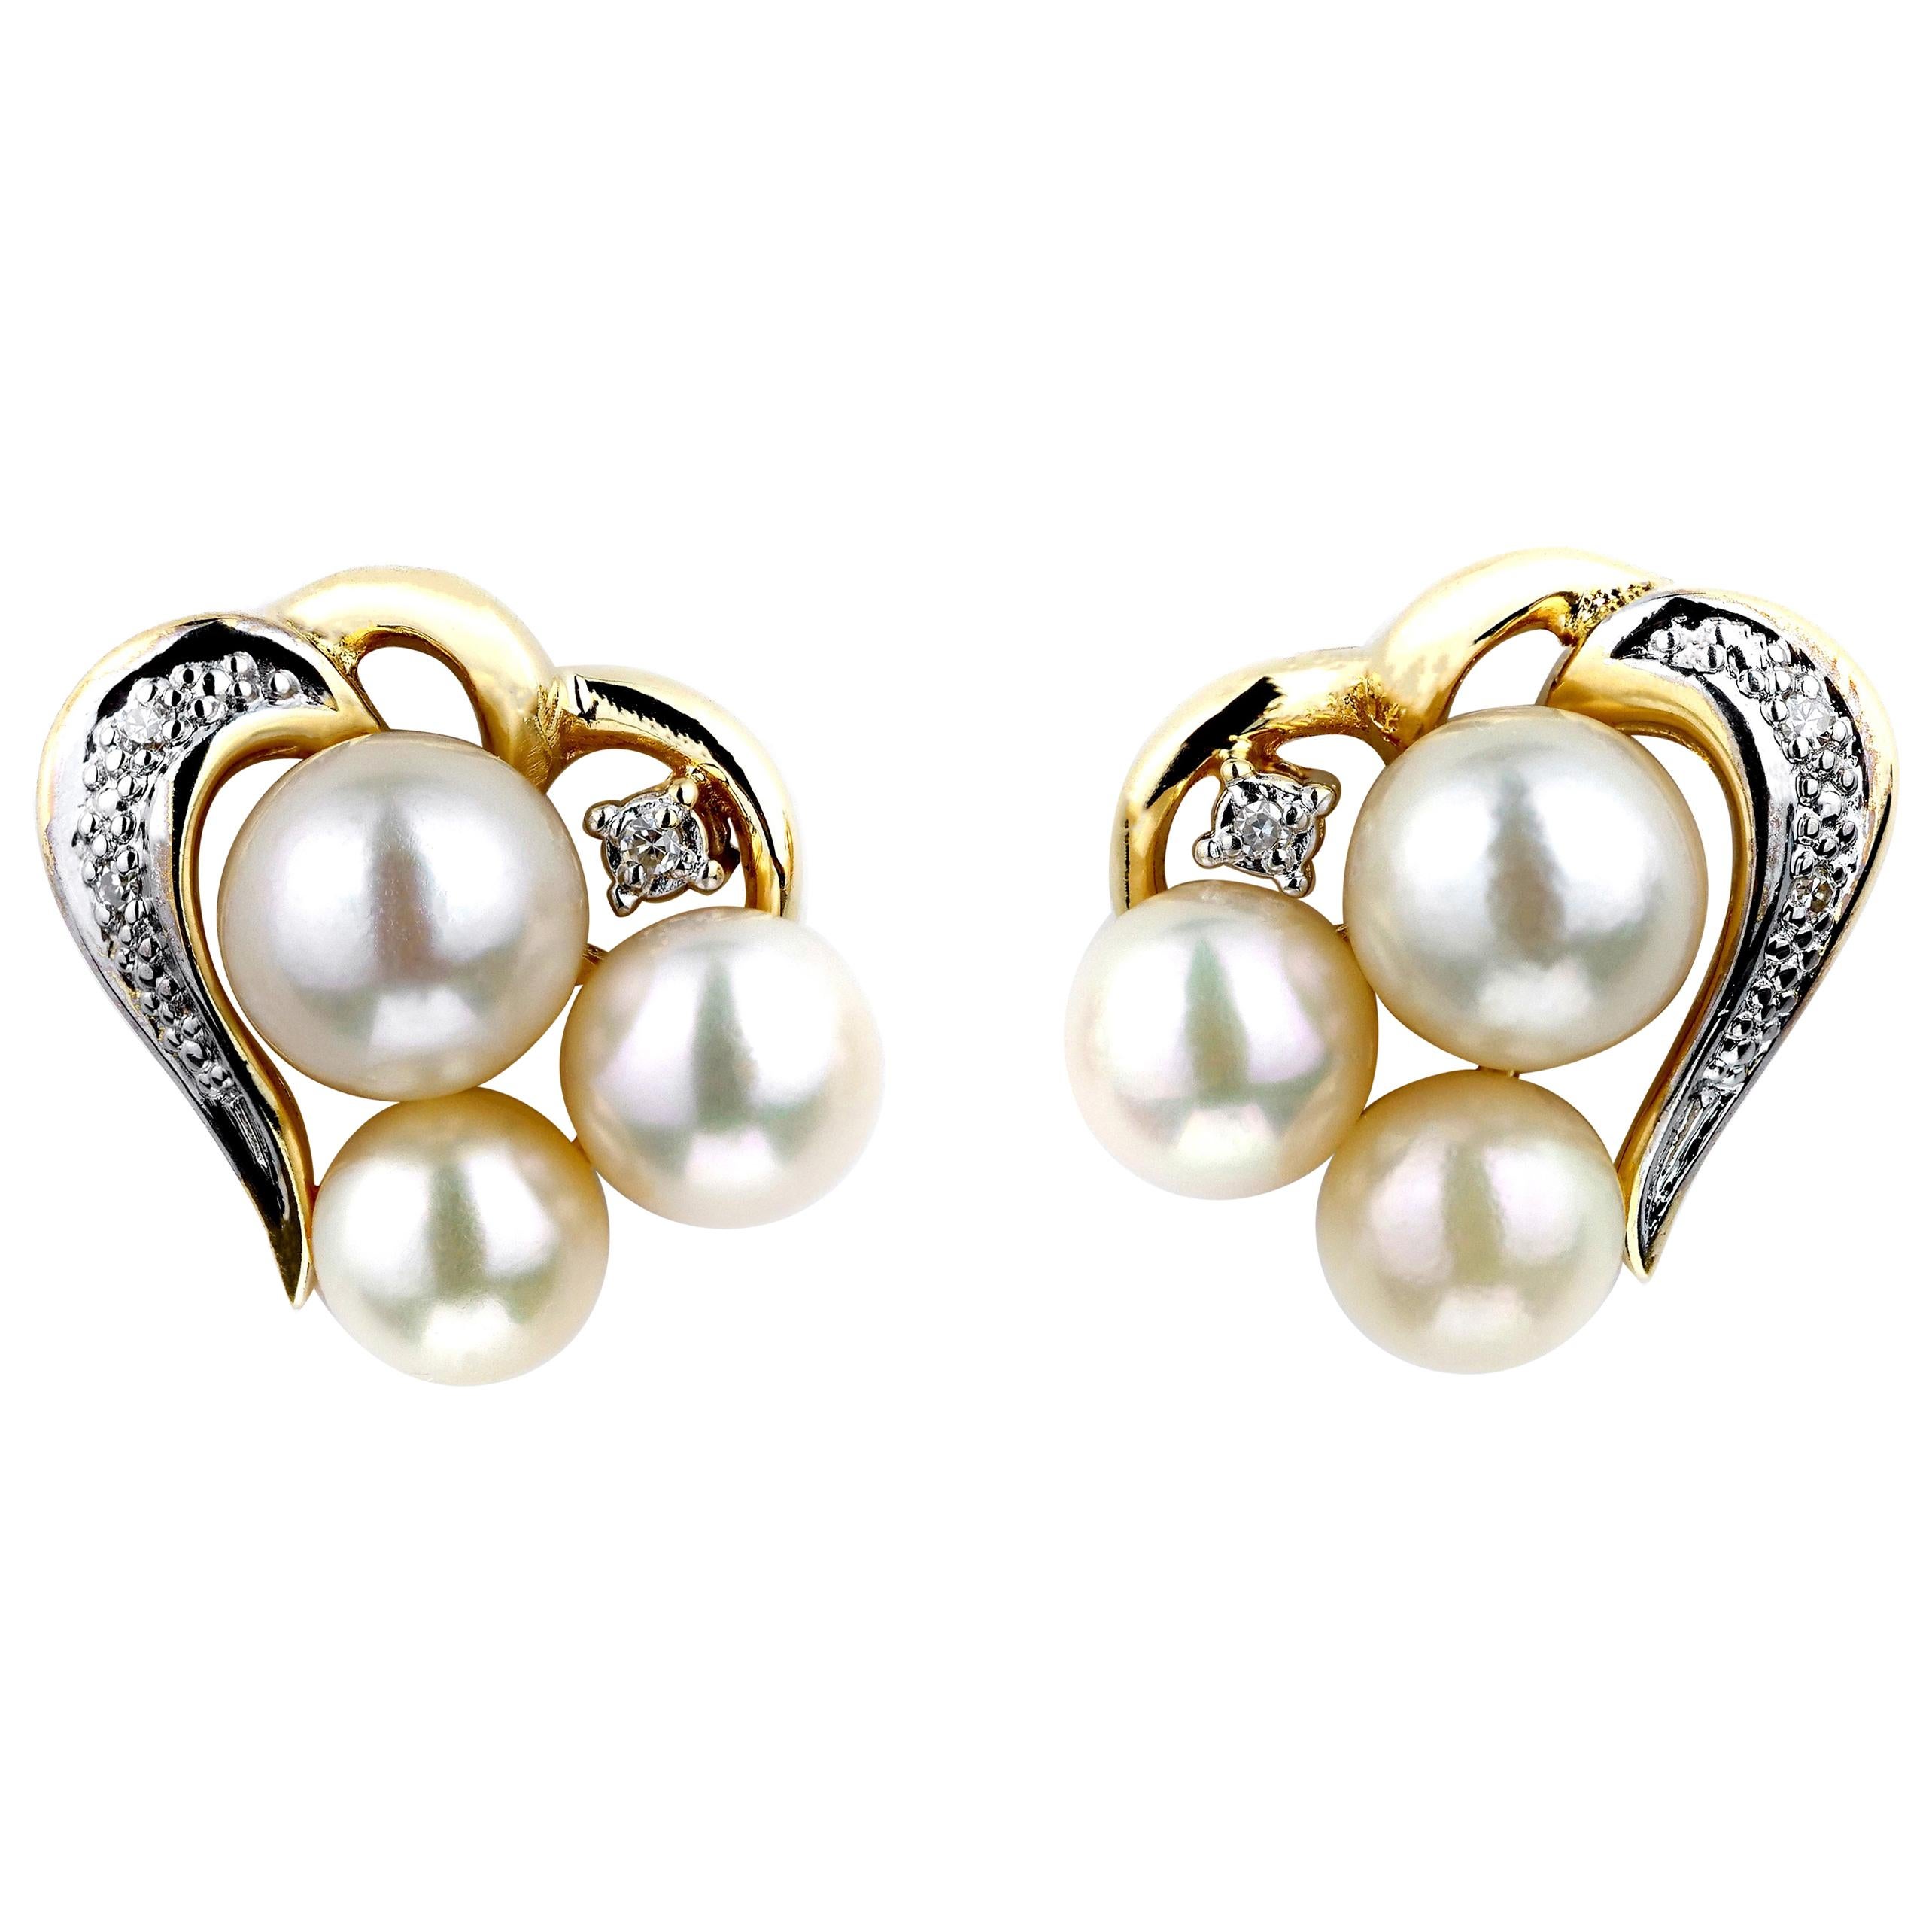 Pearl and Diamond Heart/Love Earrings in 18 Carat Gold